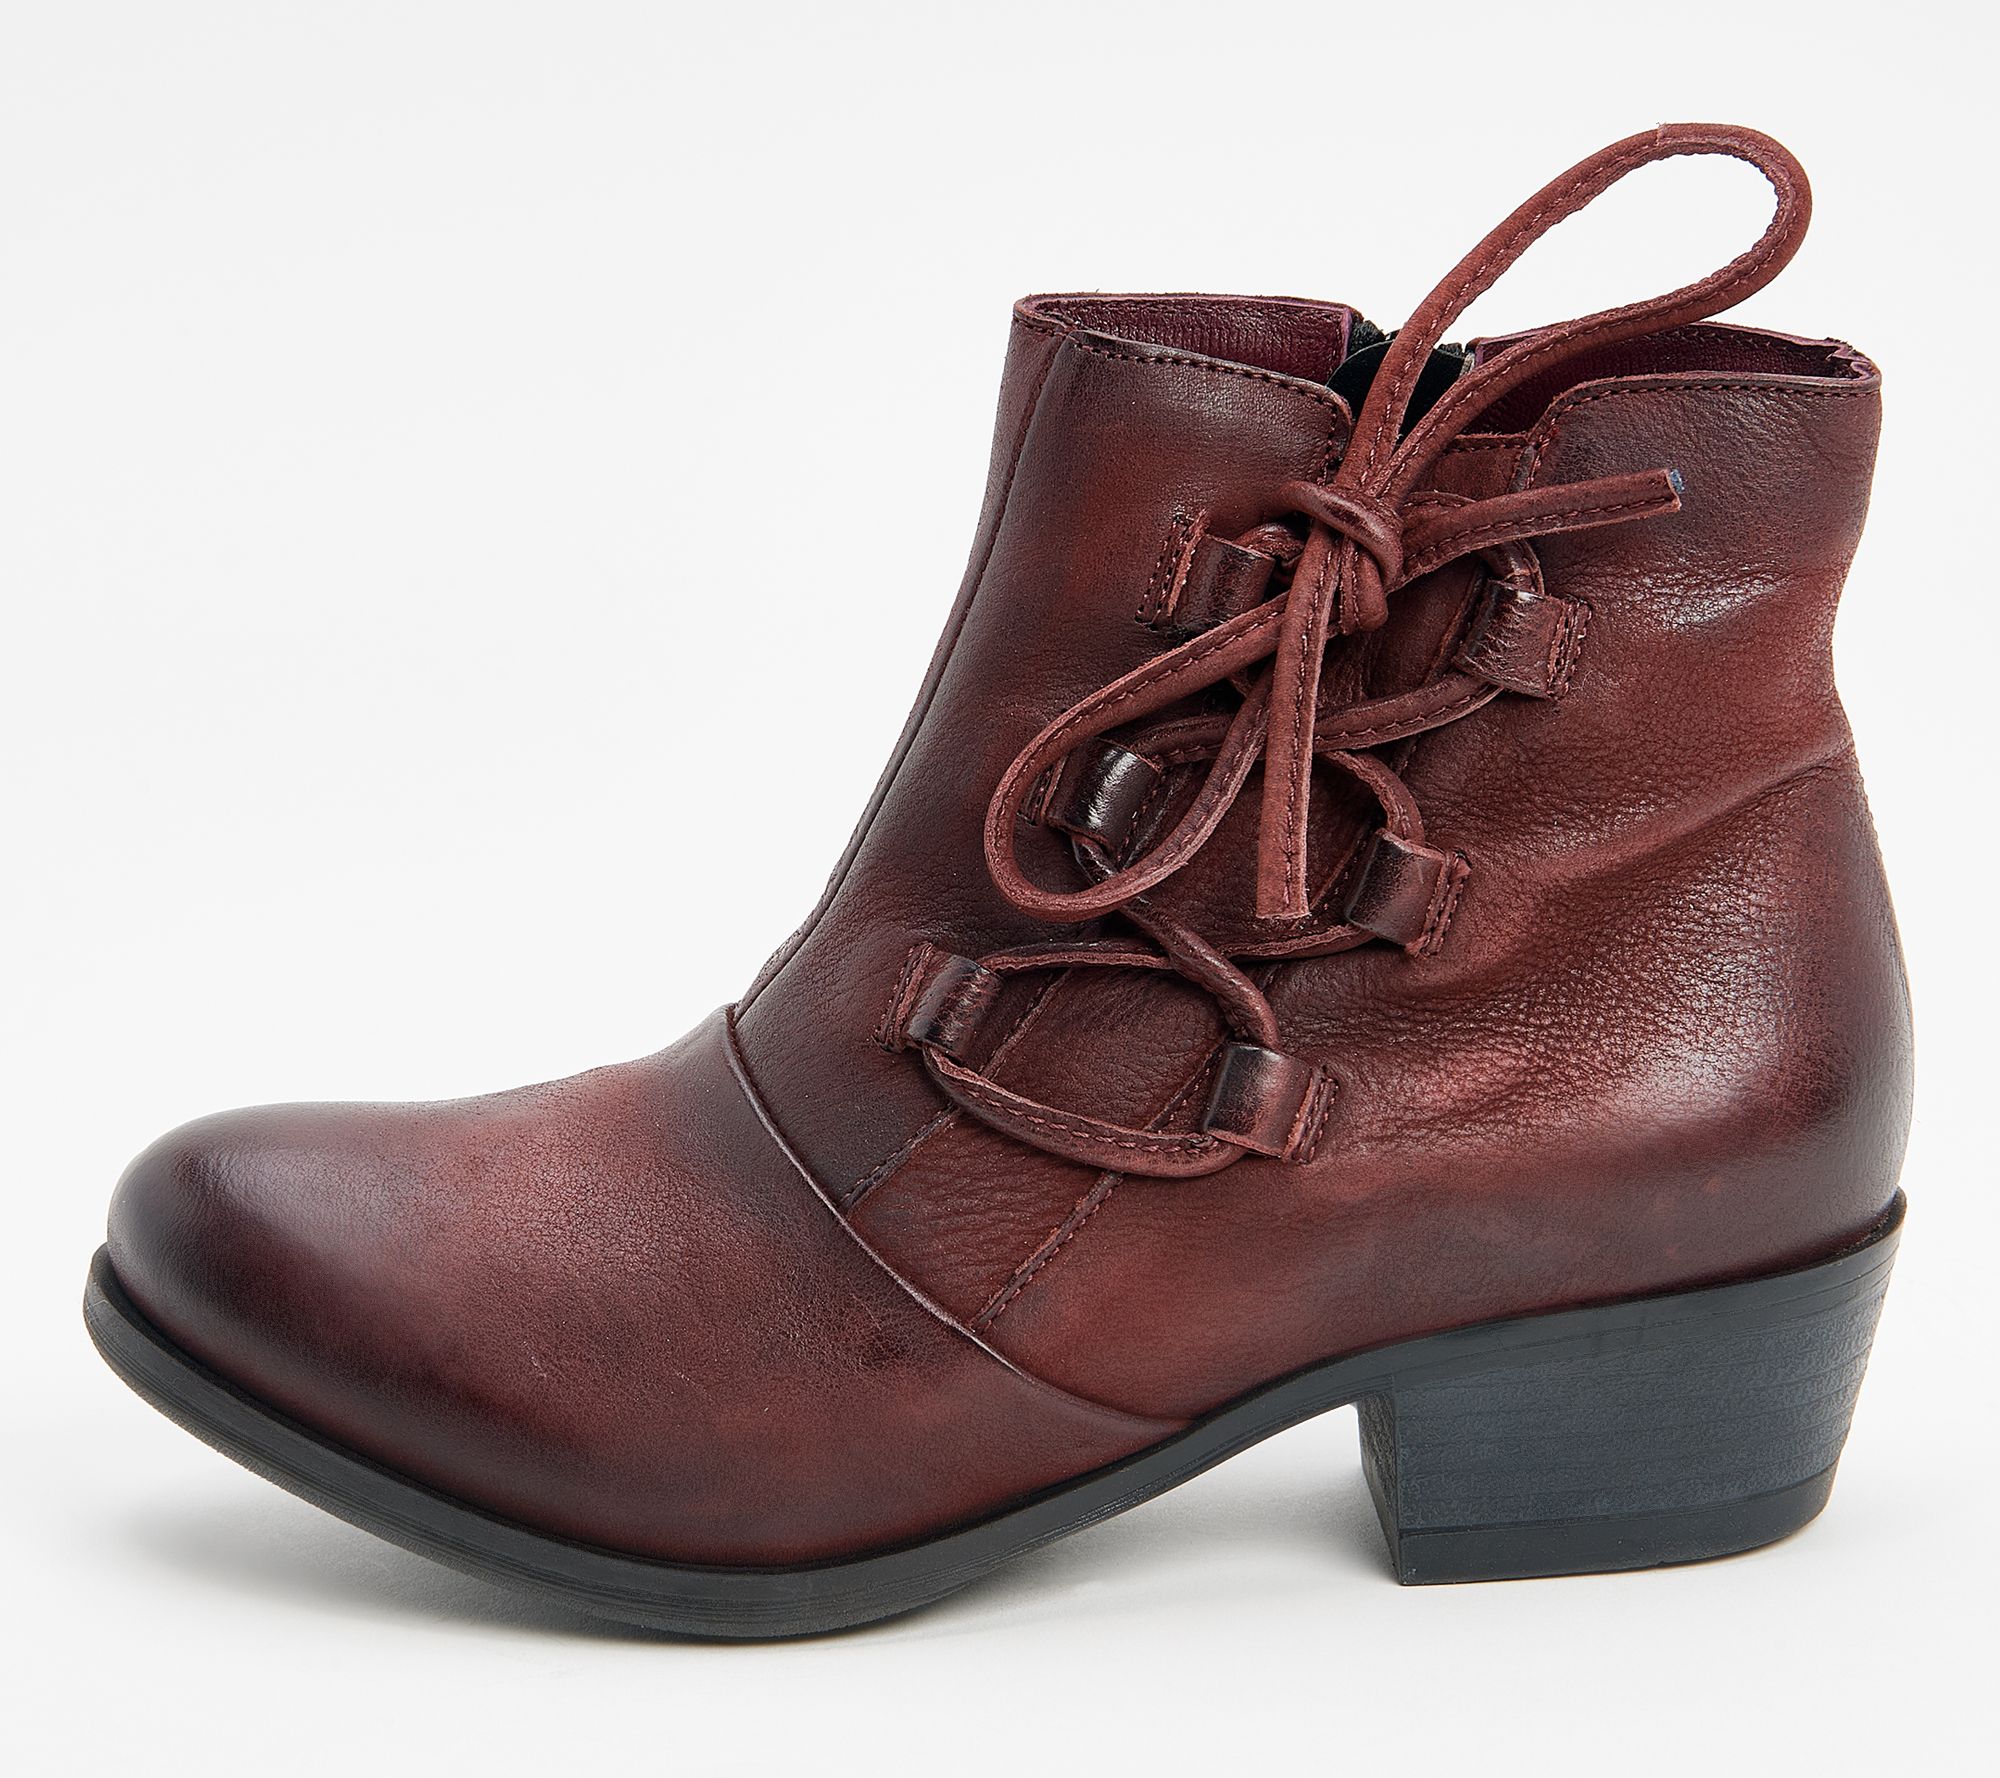 Miz Mooz Leather Wide Width Side-Tie Ankle Boots - Baxter - QVC.com